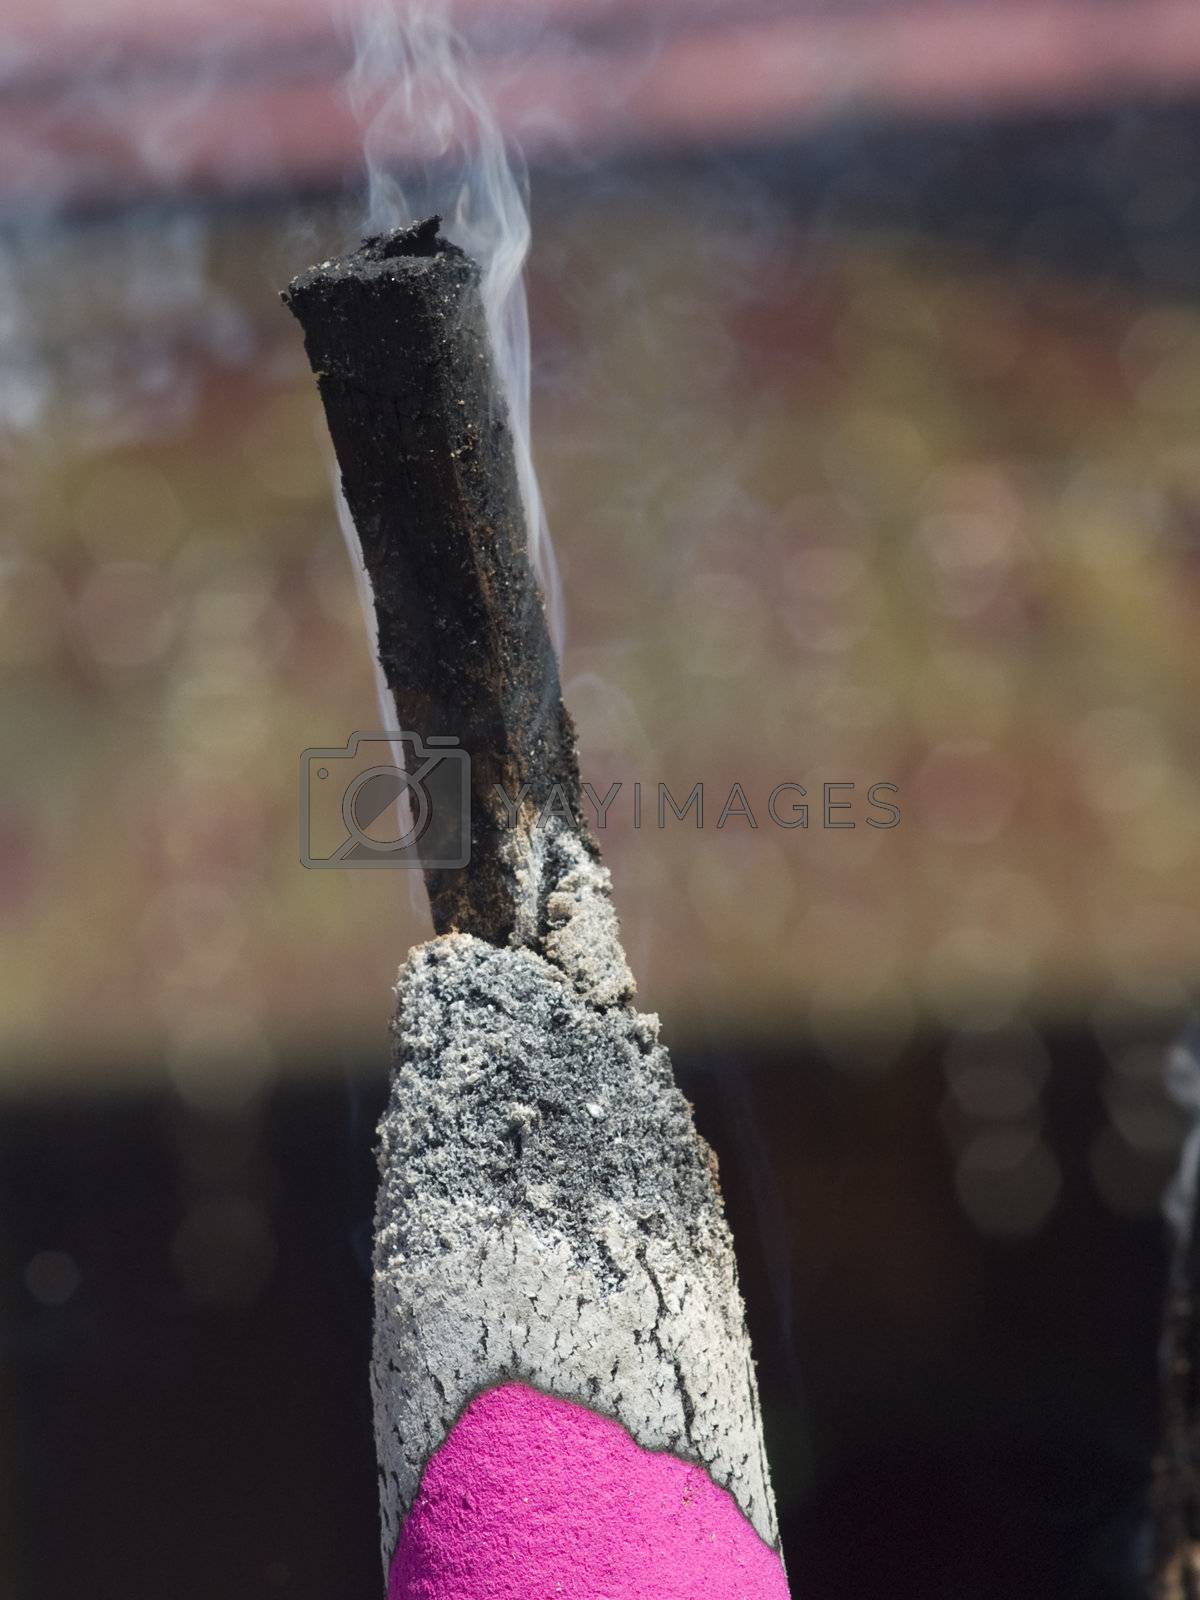 Royalty free image of Giant joss stick by epixx